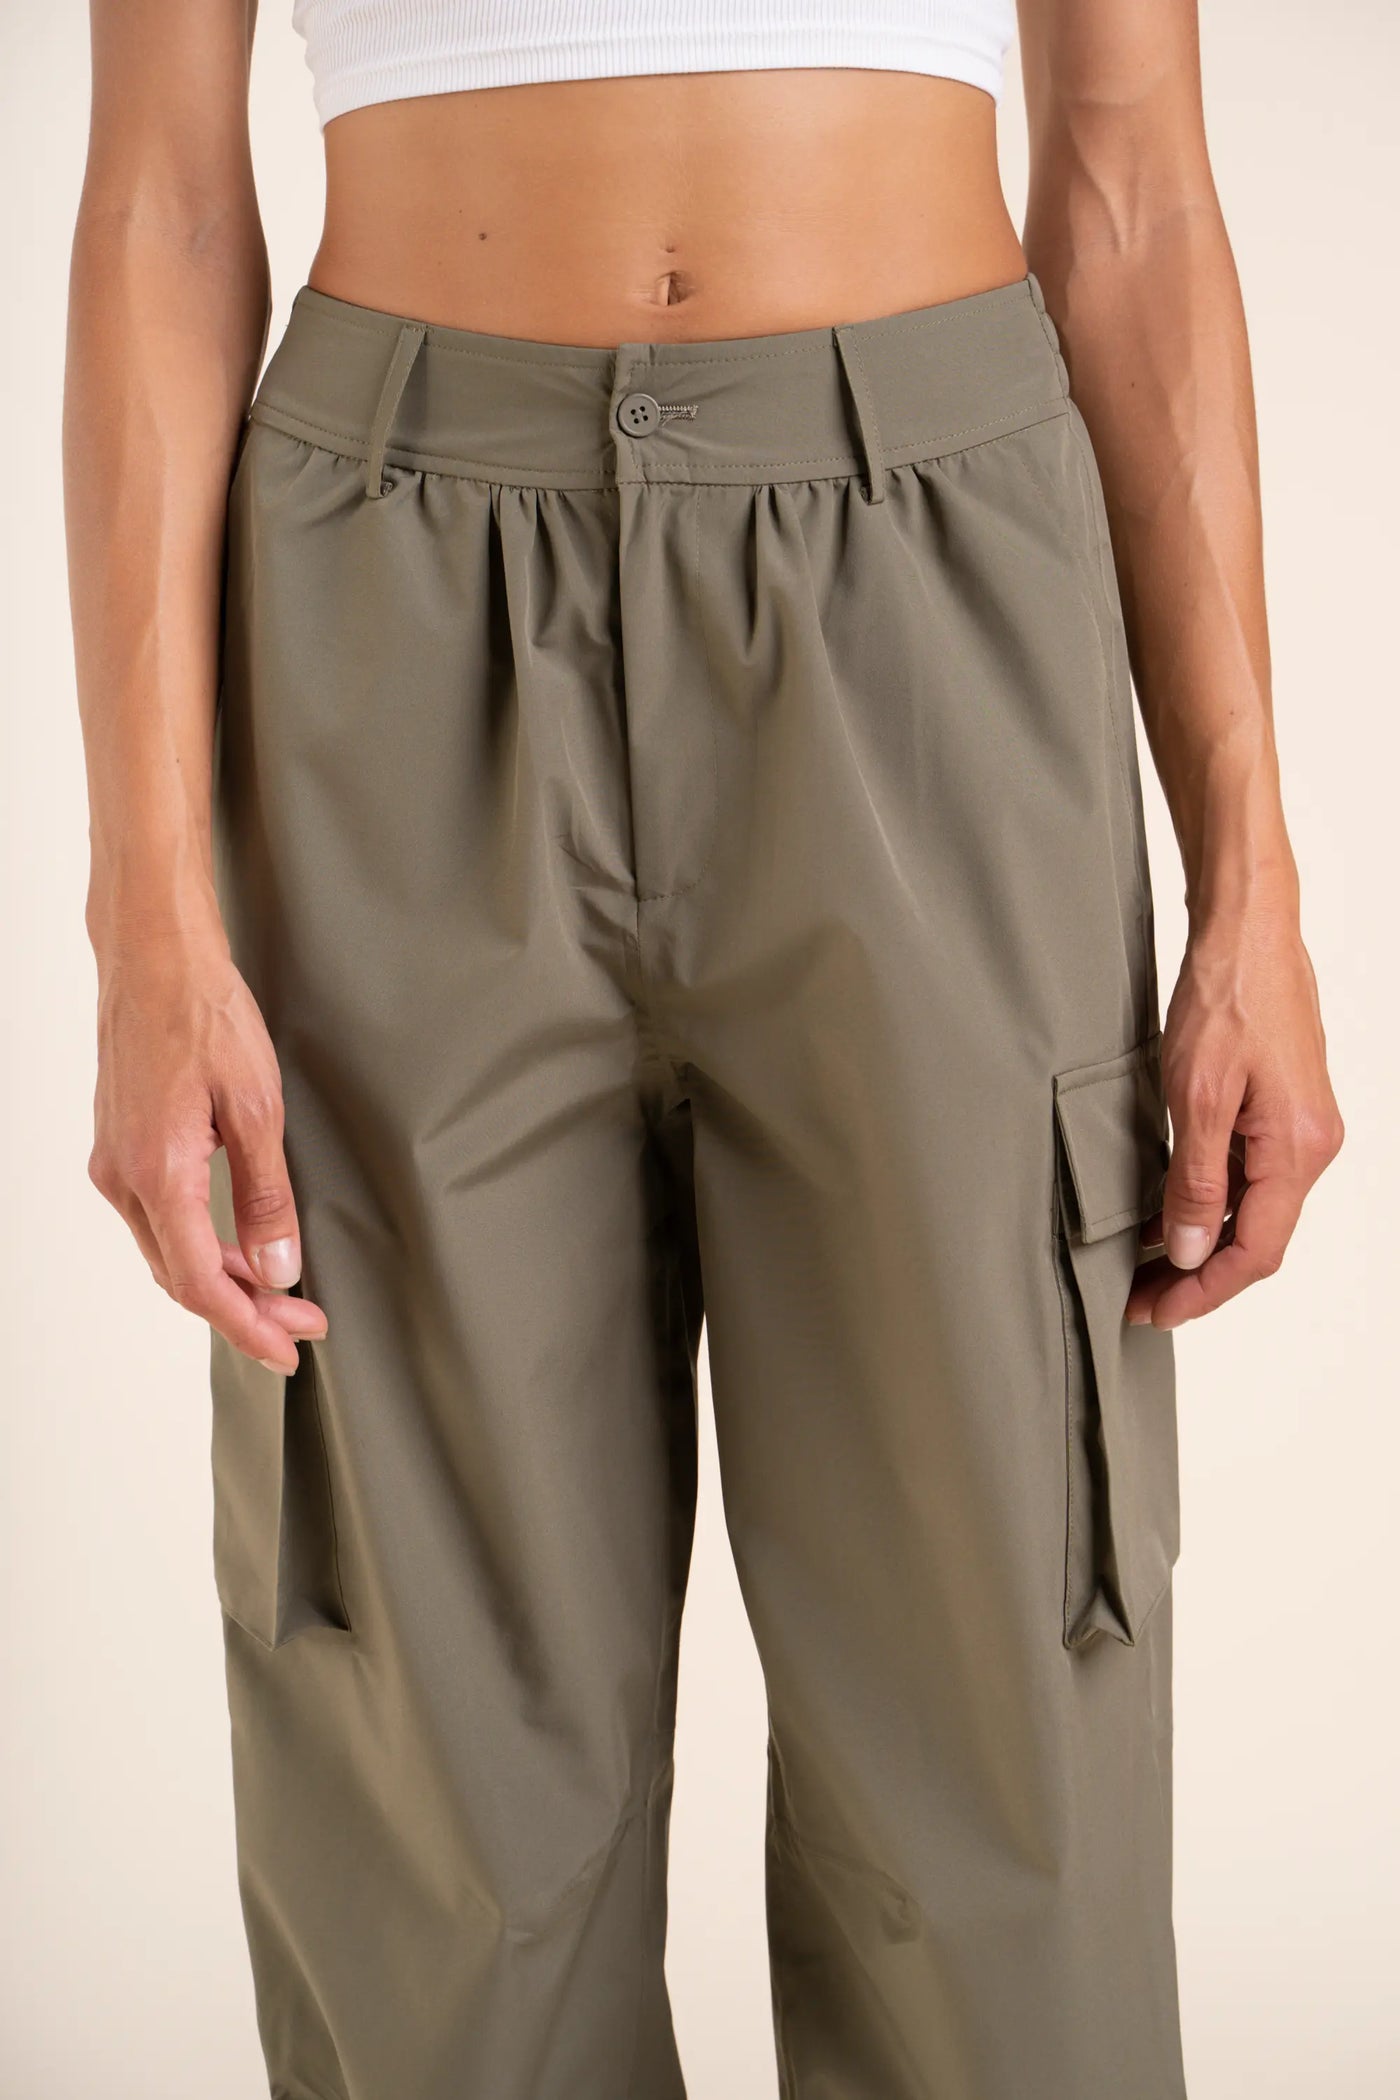 Gambetta waterproof multi-pocket cargo pants #kaki_color